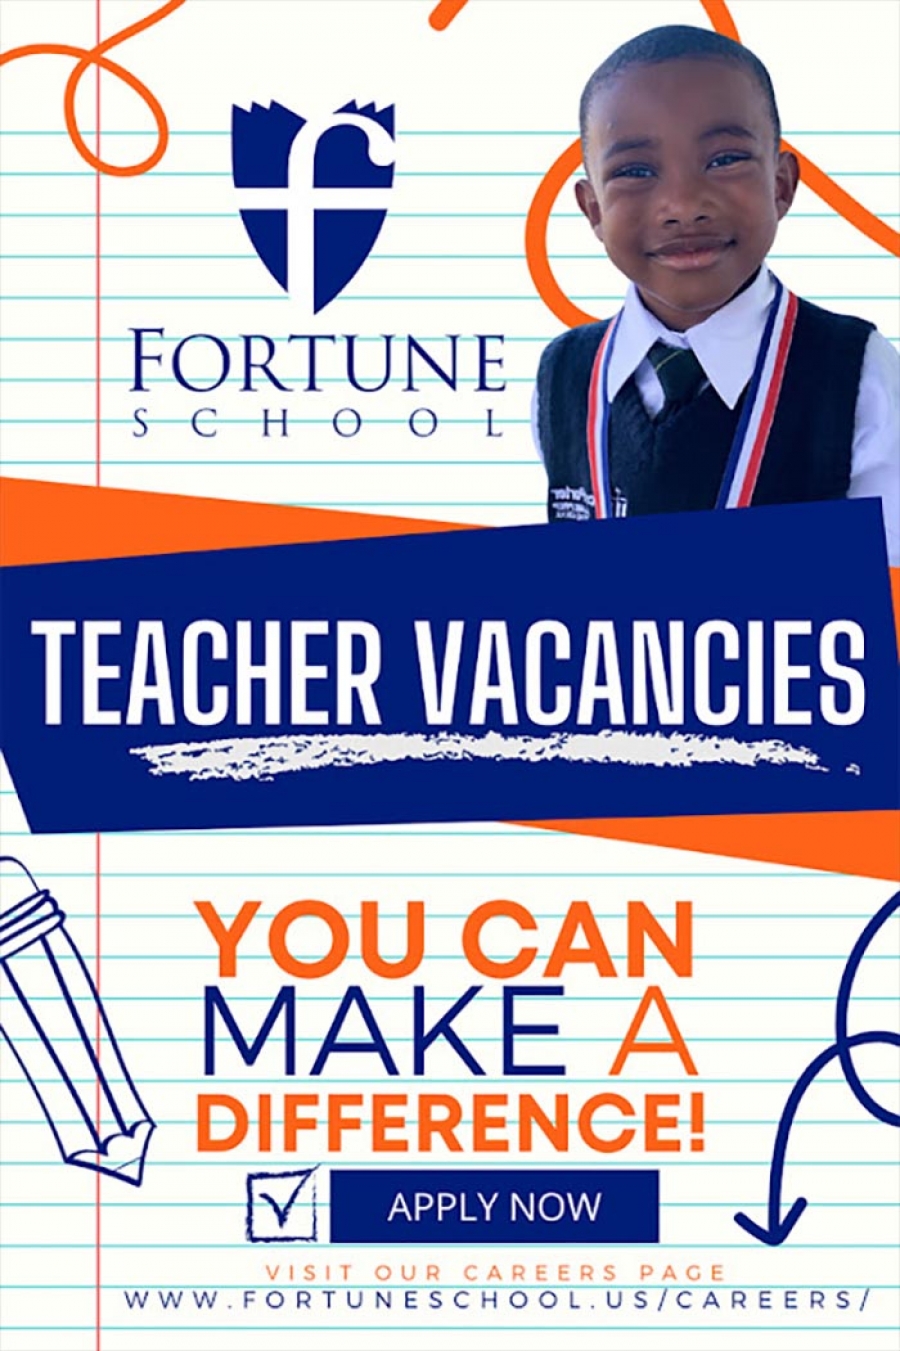 Join the Team - Teacher Vacancies at Fortune School